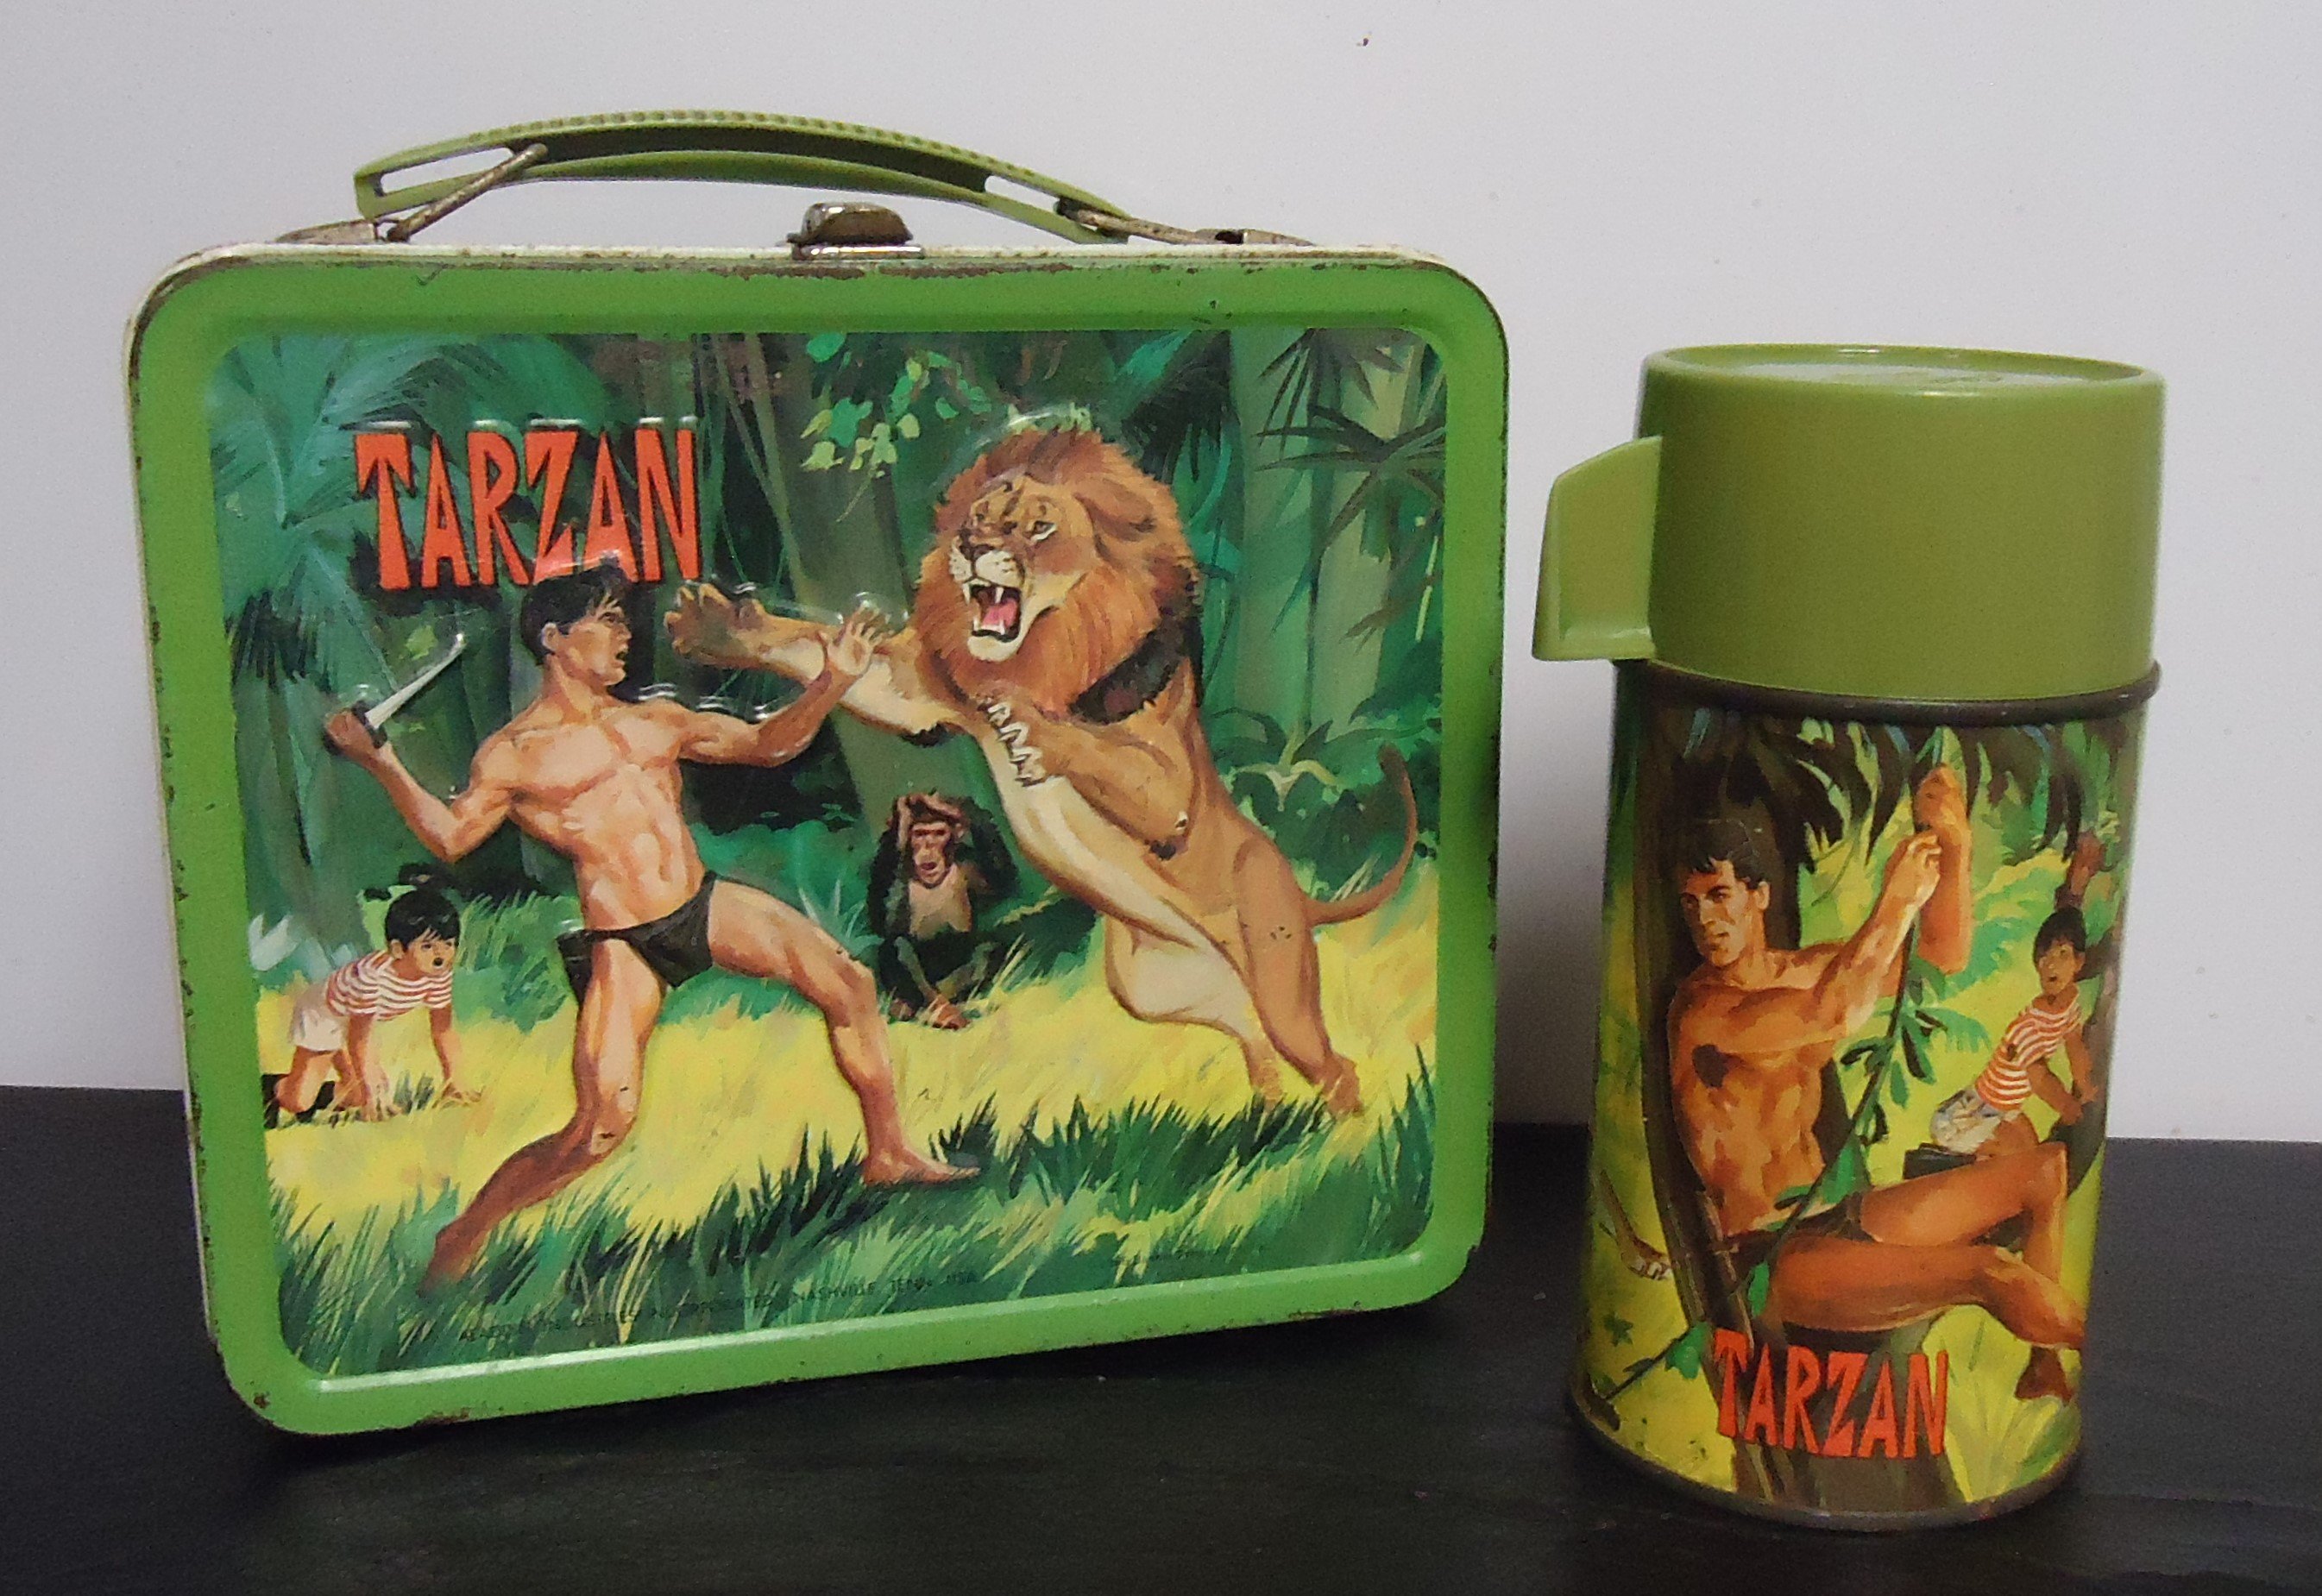 (4) "Tarzan" Metal Lunch Box
W/ Thermos
$150.00